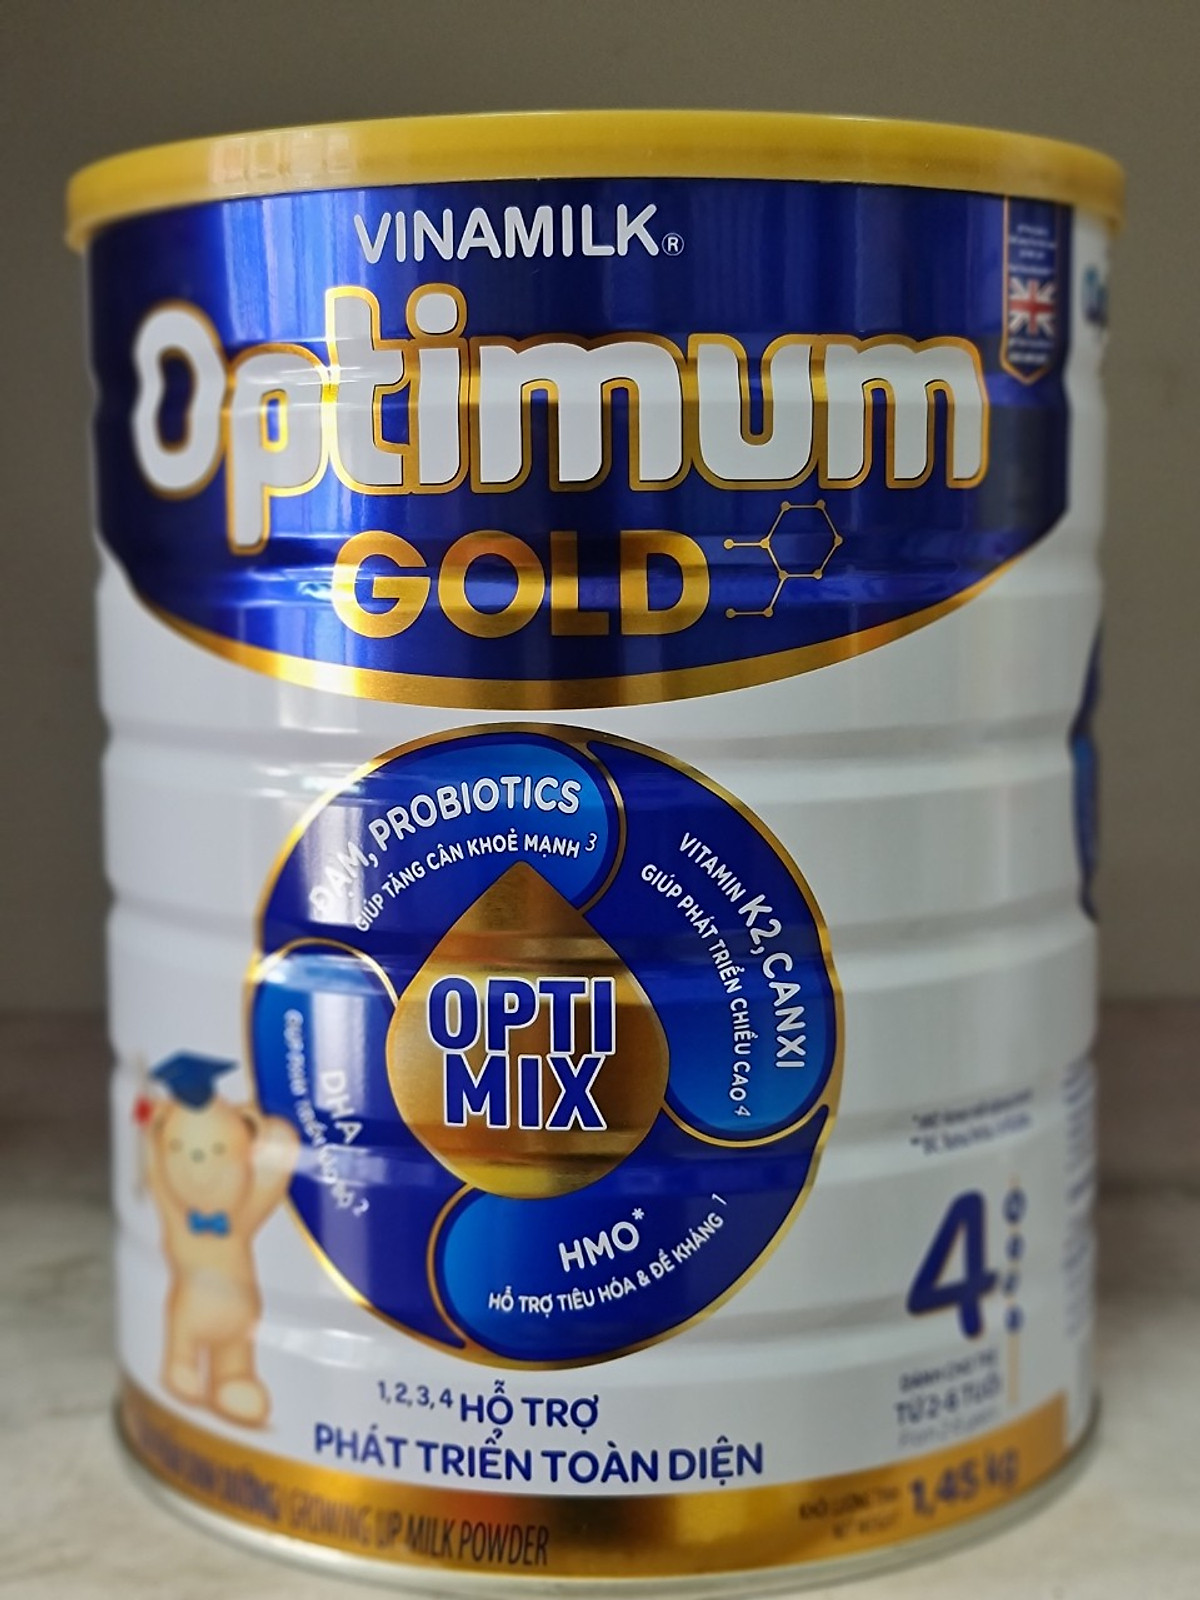 Sữa bột VinamilkOptimum Gold Step 4 Hộp Thiếc 1450g